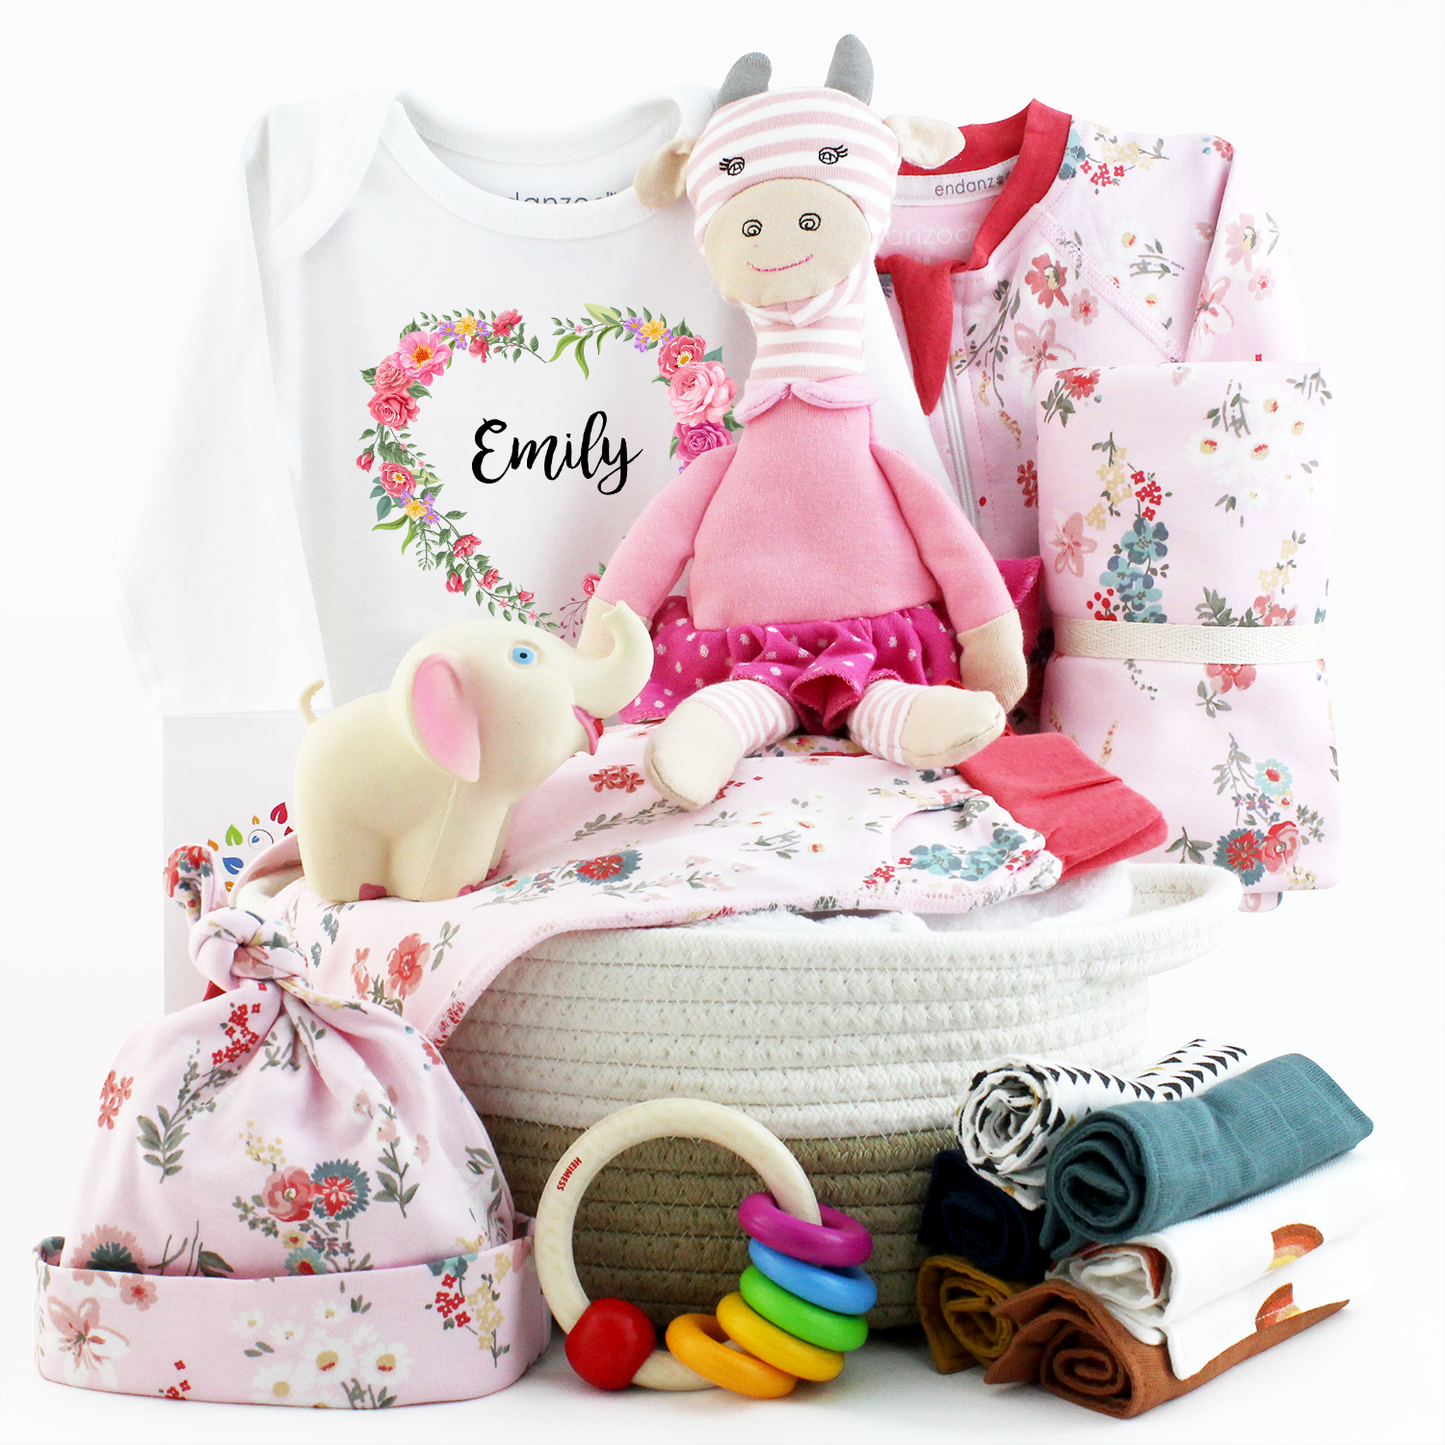 Zeronto Mom & Baby Gift Basket - Garden of Pink Blossom